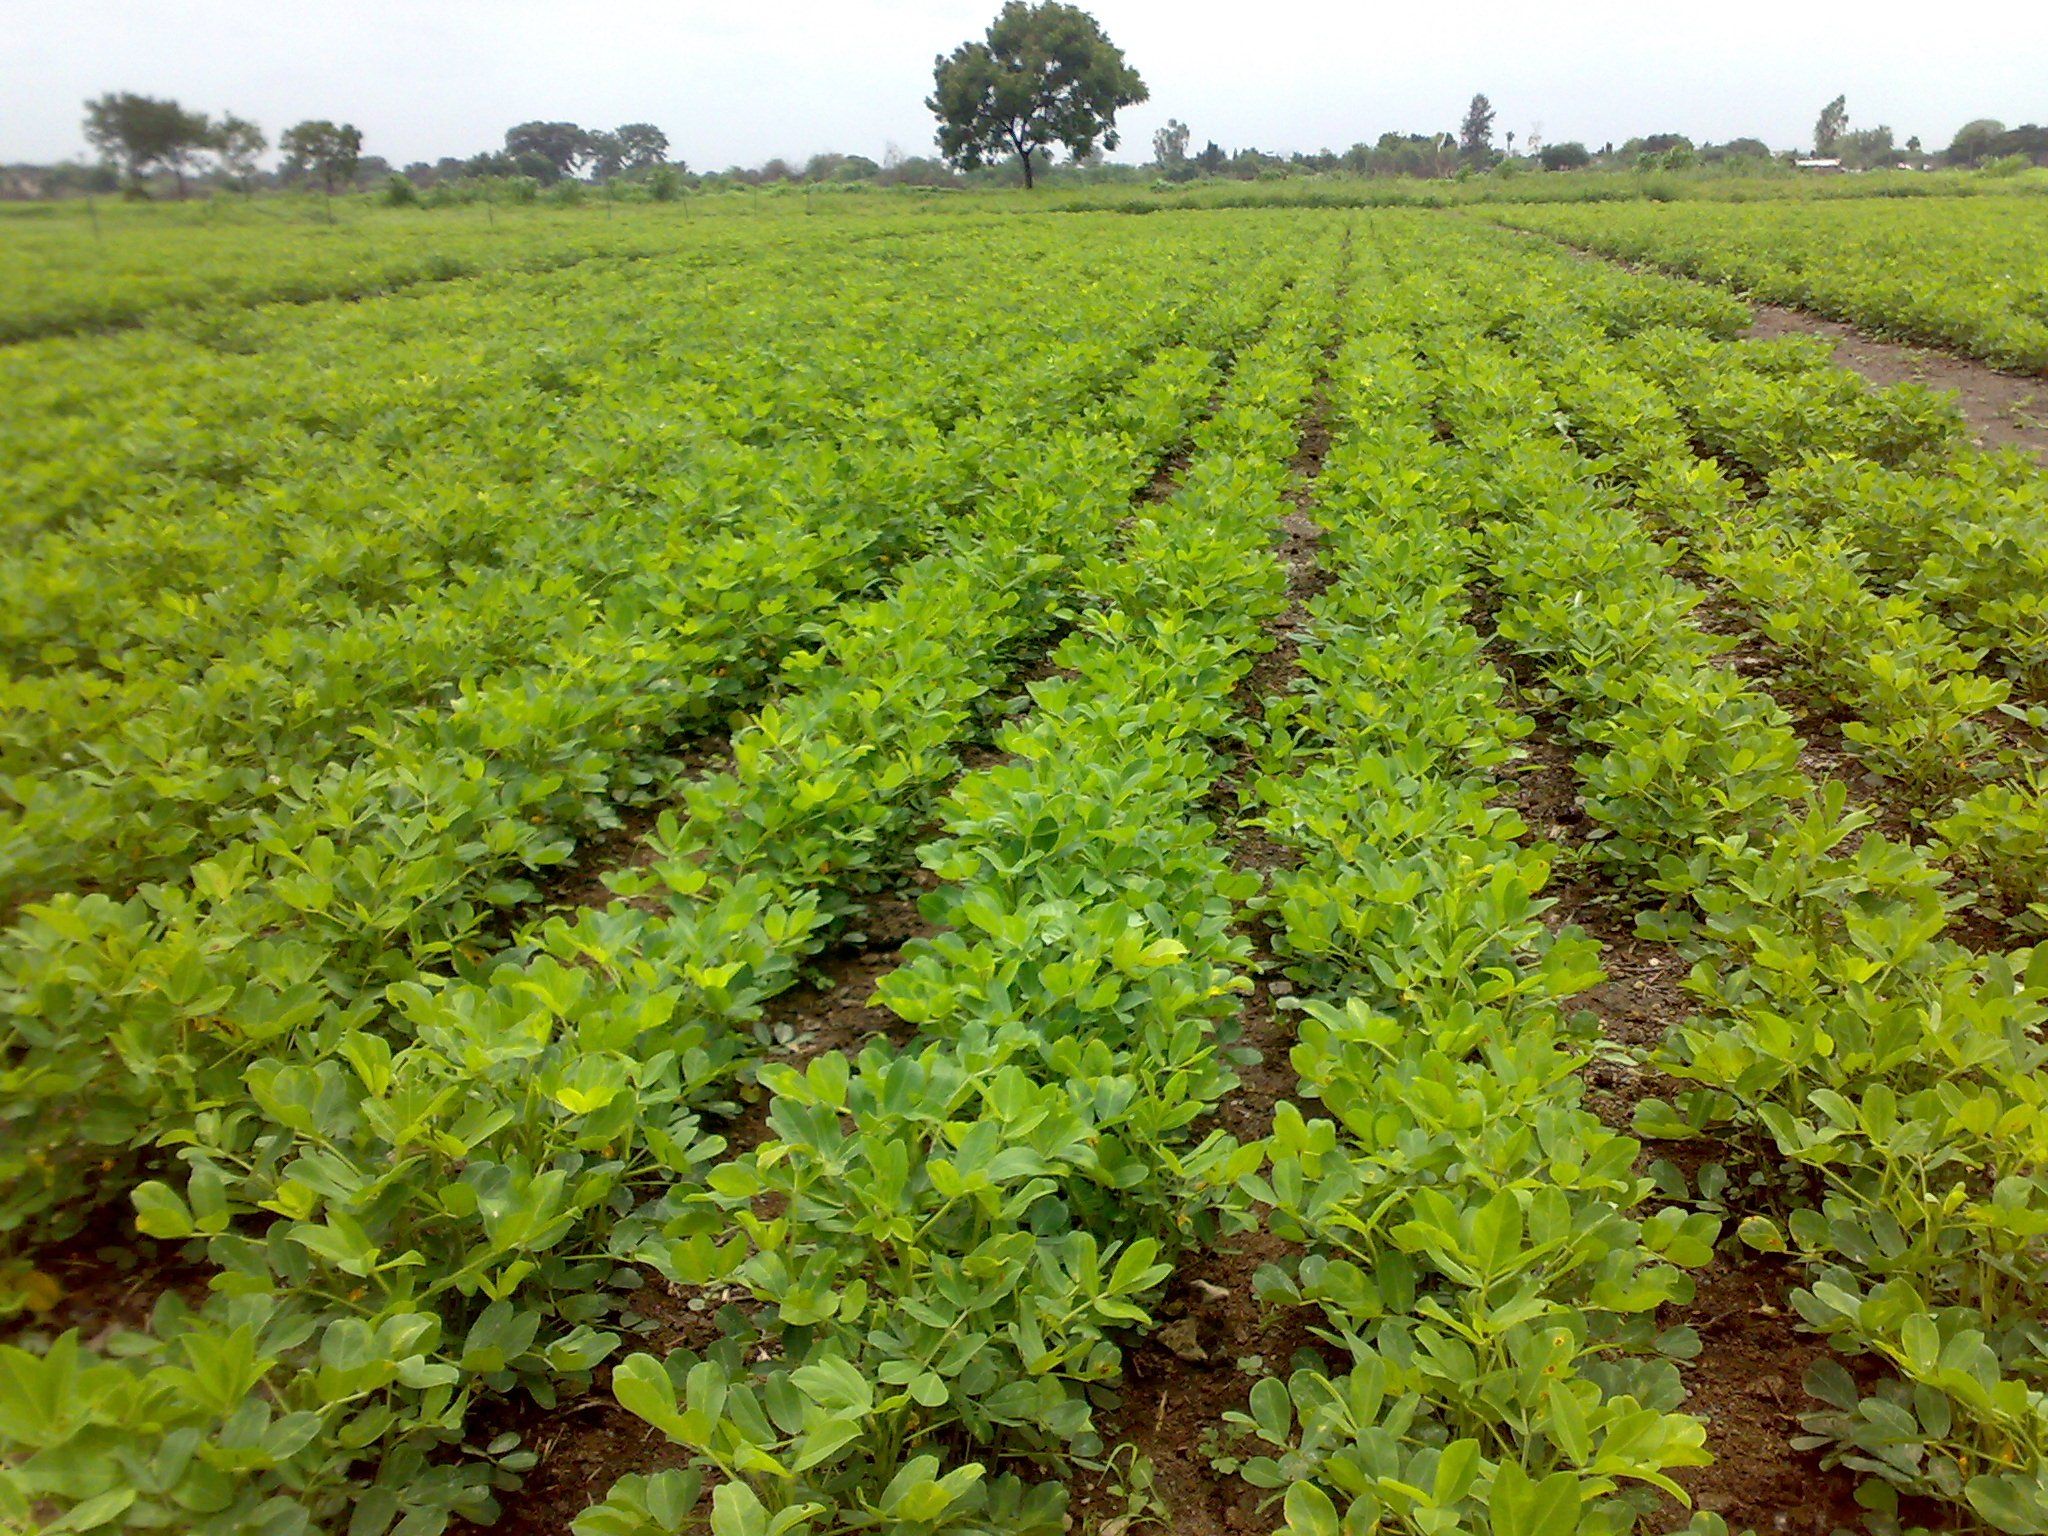 Cultivation_of_peanut_crop_in_Junagadh_region_of_Western_India.jpg